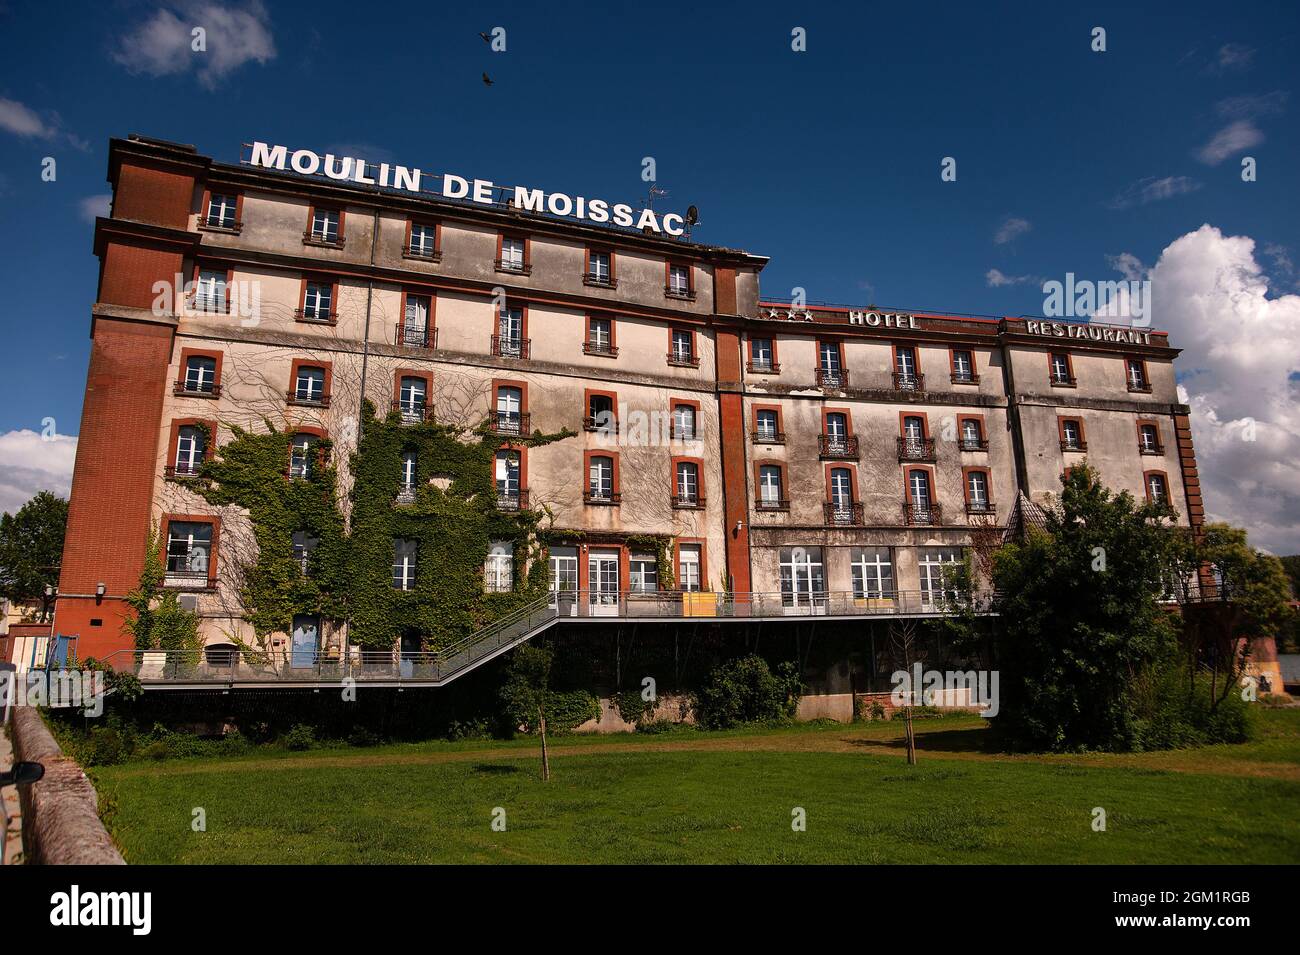 Moulin de Moissac hotel, Moissac, Tarn-et-Garonne department, France Stock Photo